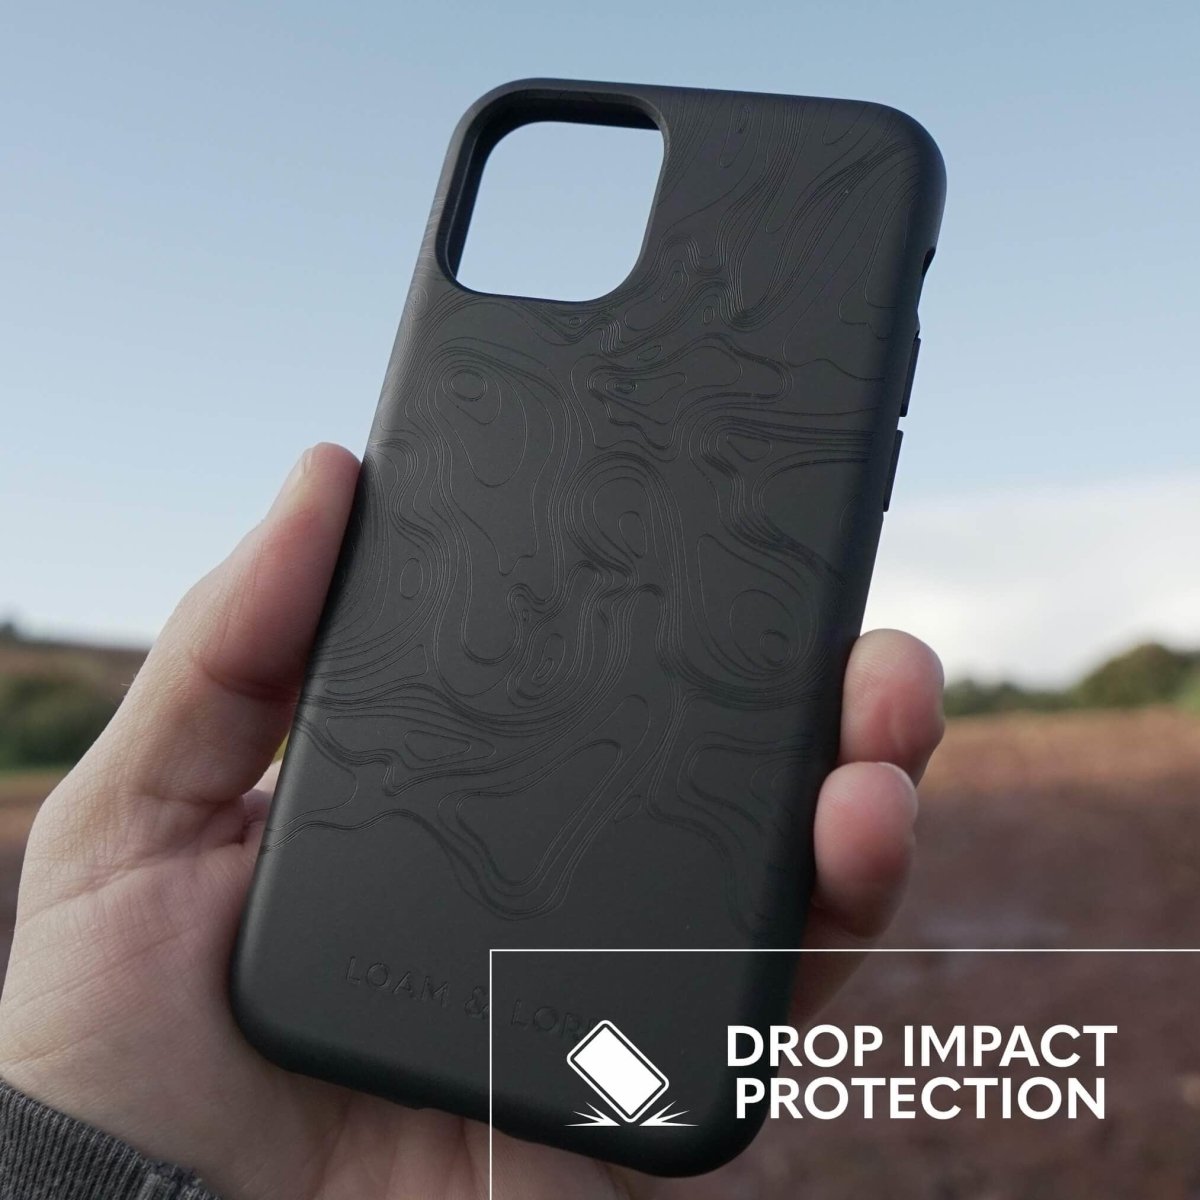 Sale - Biodegradable iPhone 11 Pro Max Case - Loam & Lore